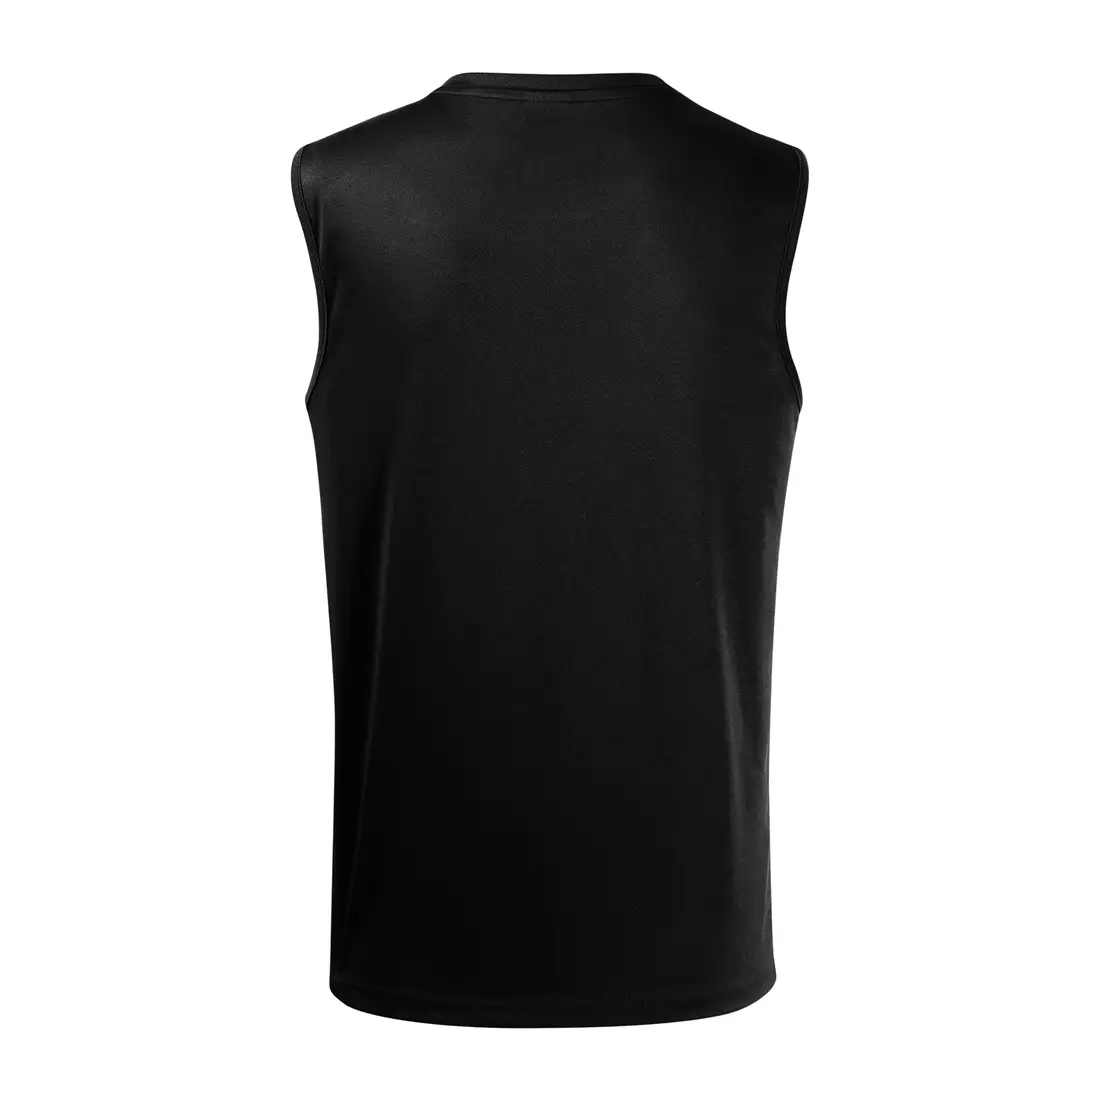 MALFINI BREEZE Športové pánske tielko bez rukávov, 100 % polyester, čierne 8200112